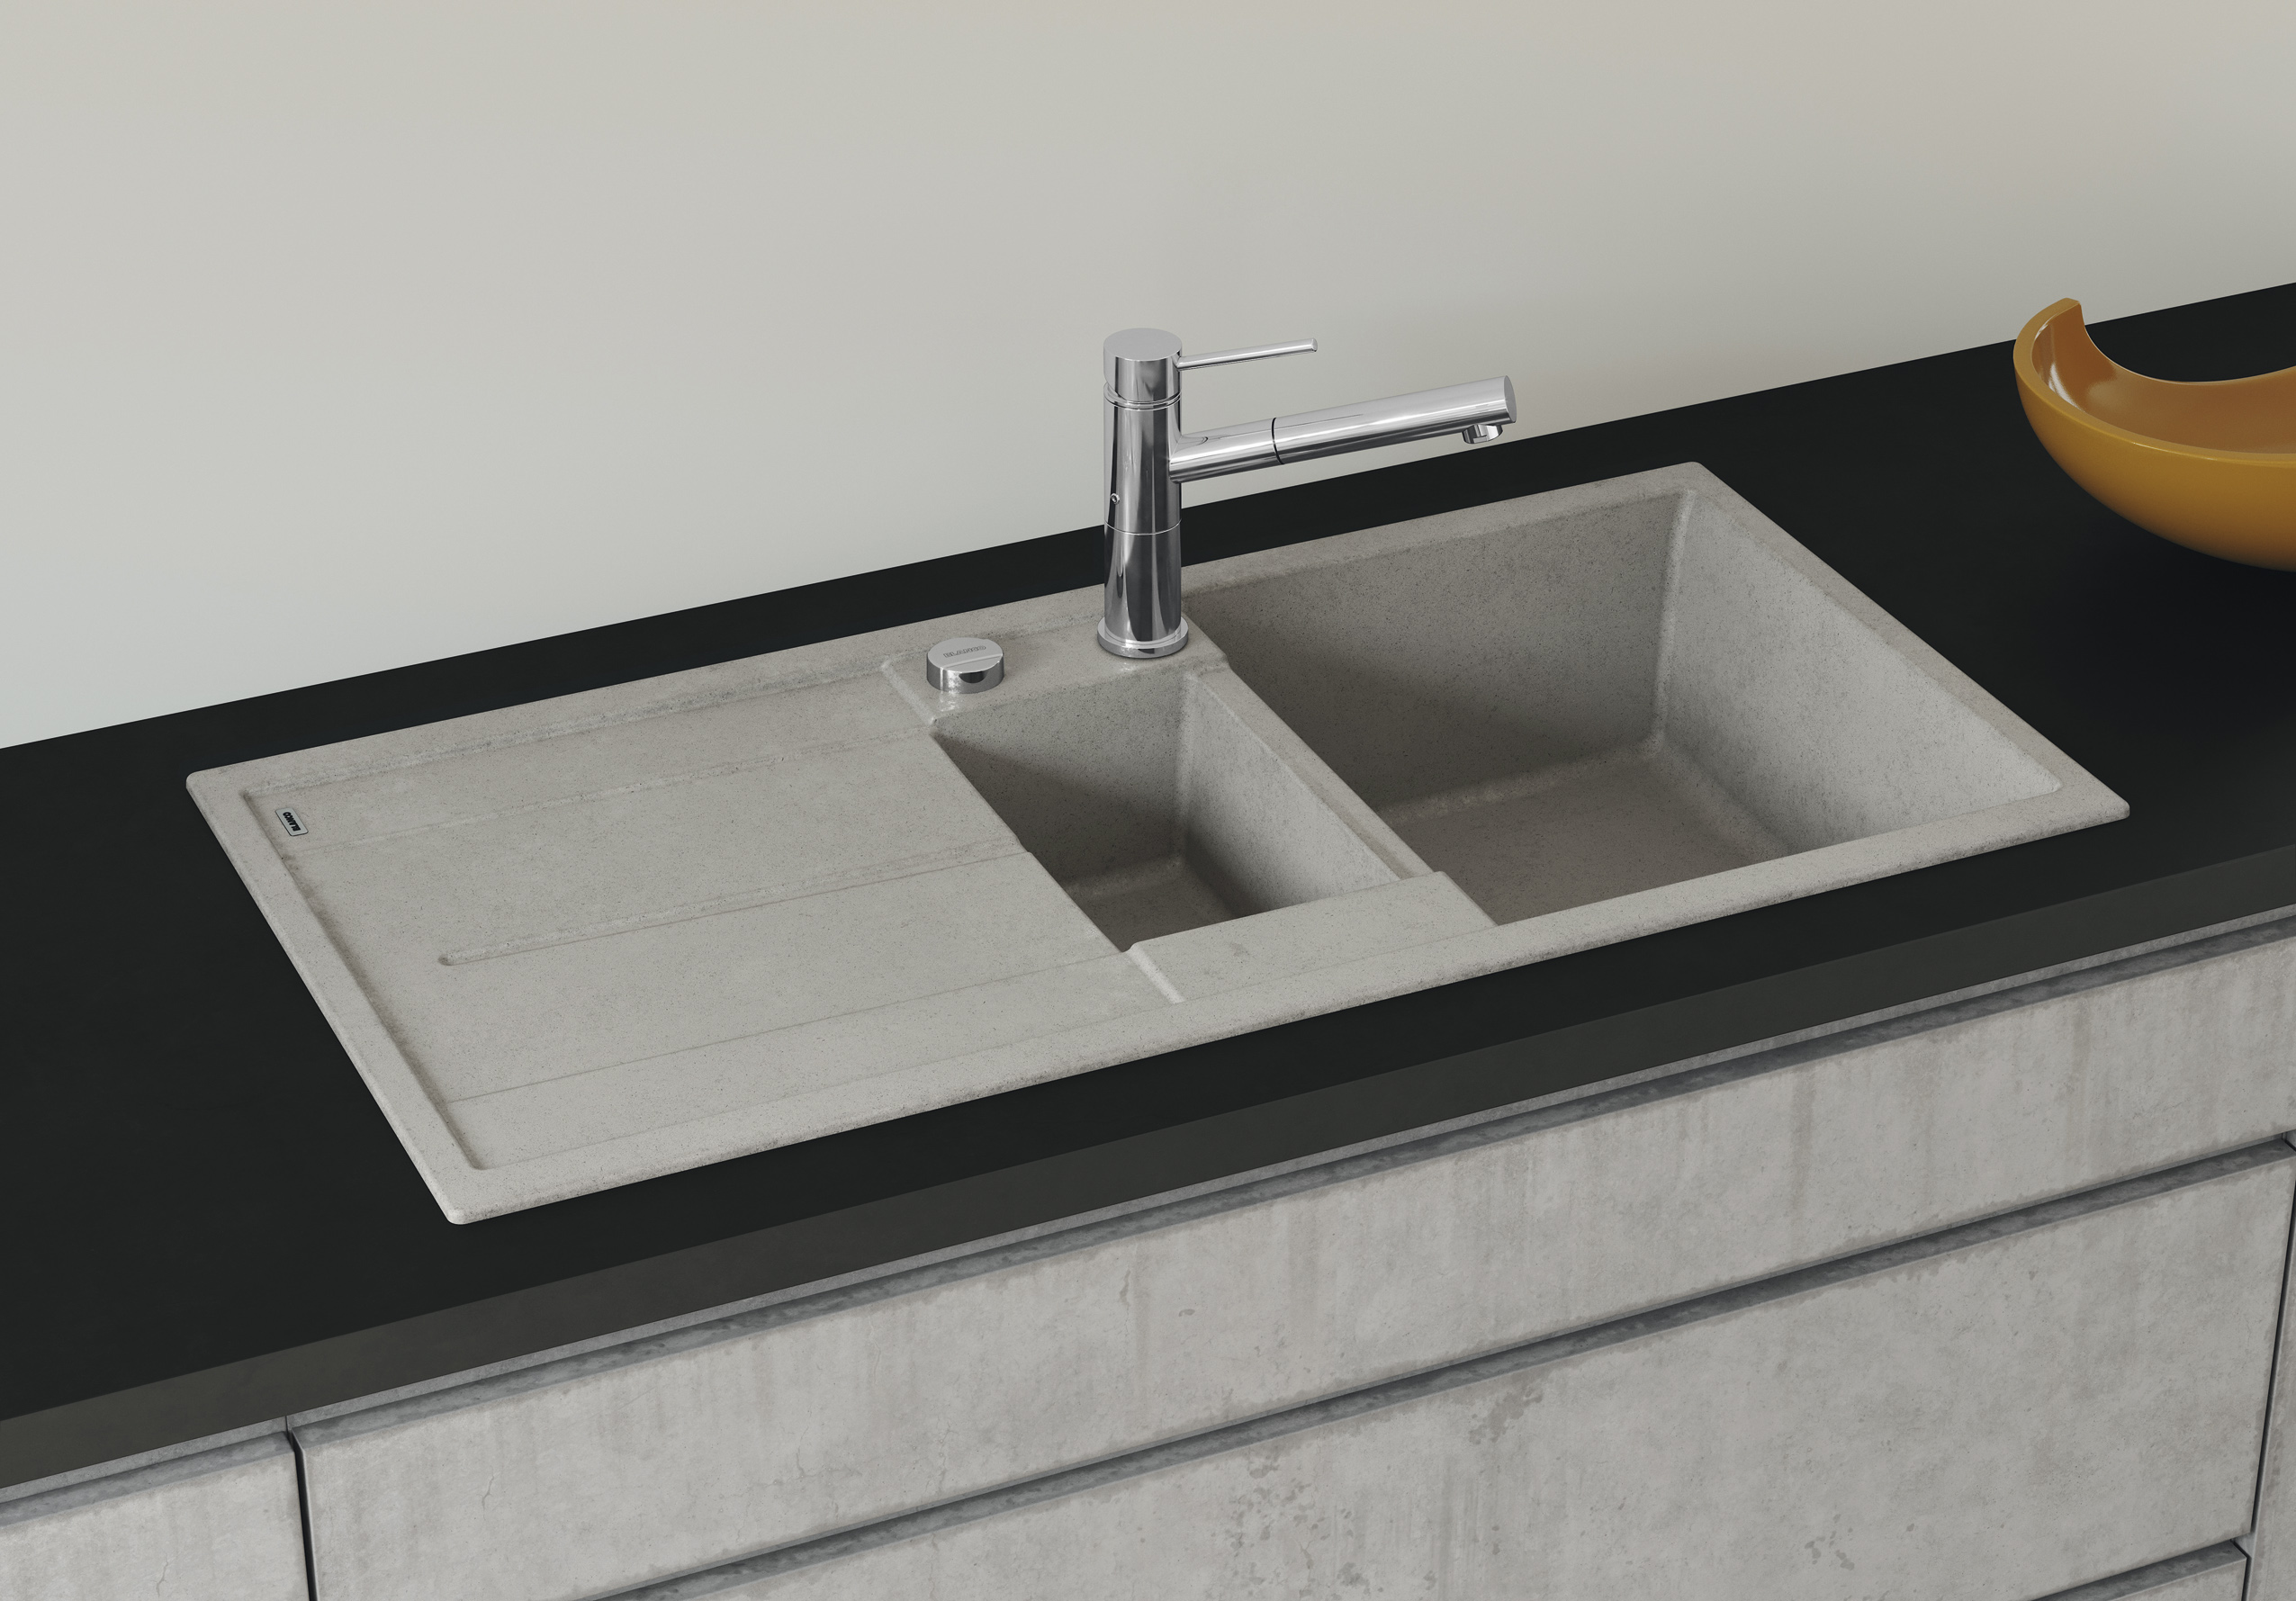 The successful Blanco Metra sink range features striking corner and base radii and an angular design